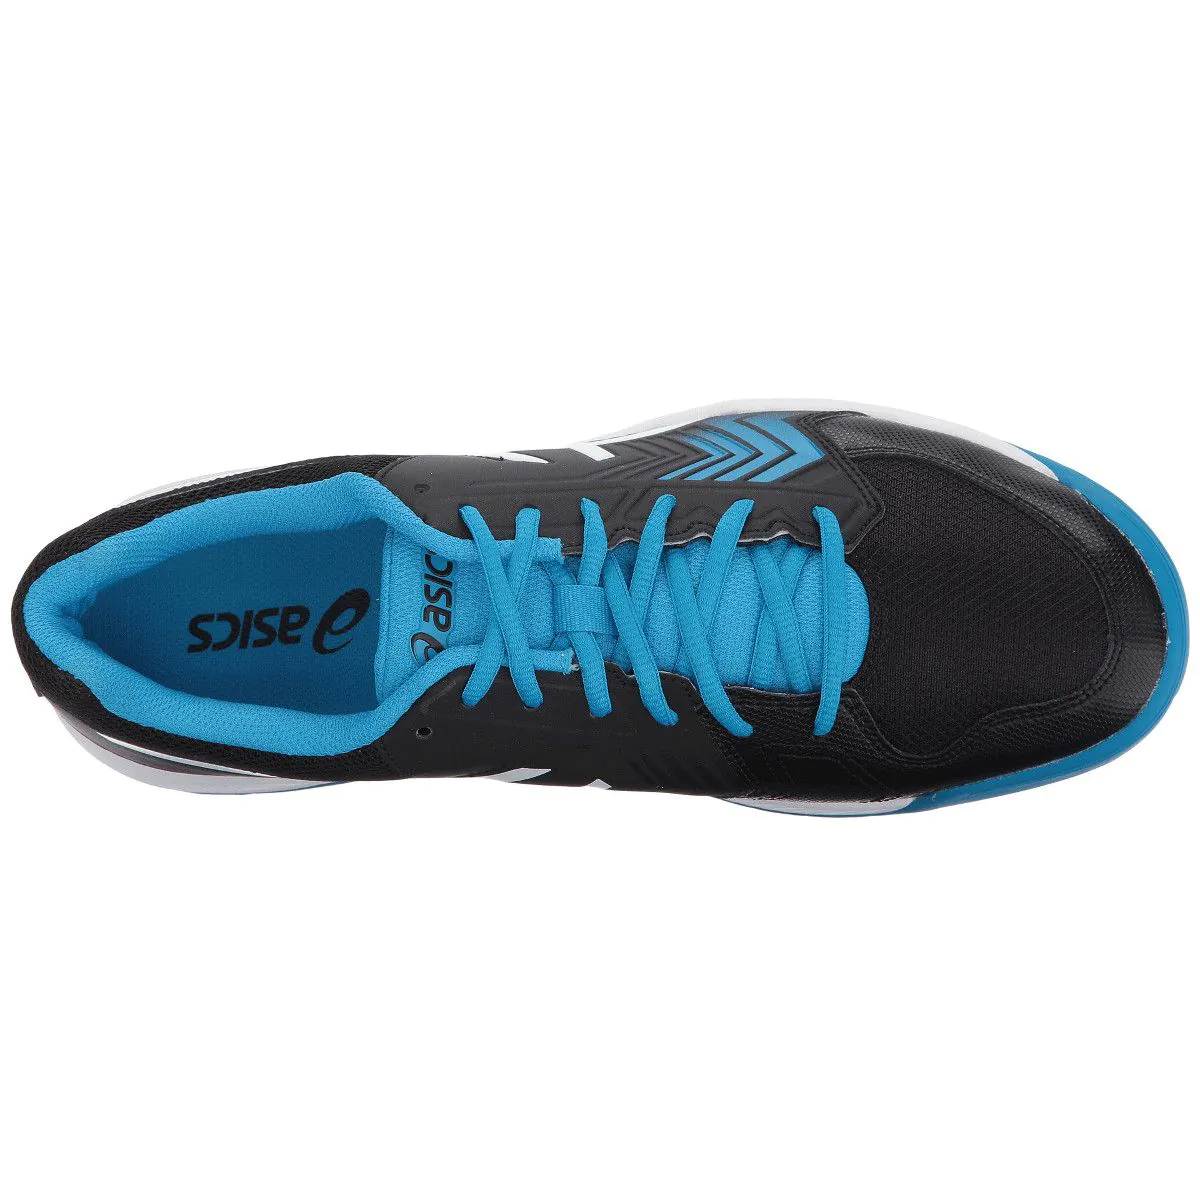 Asics GEL Dedicate 5 Clay Men's Tennis Shoes E708Y-9041